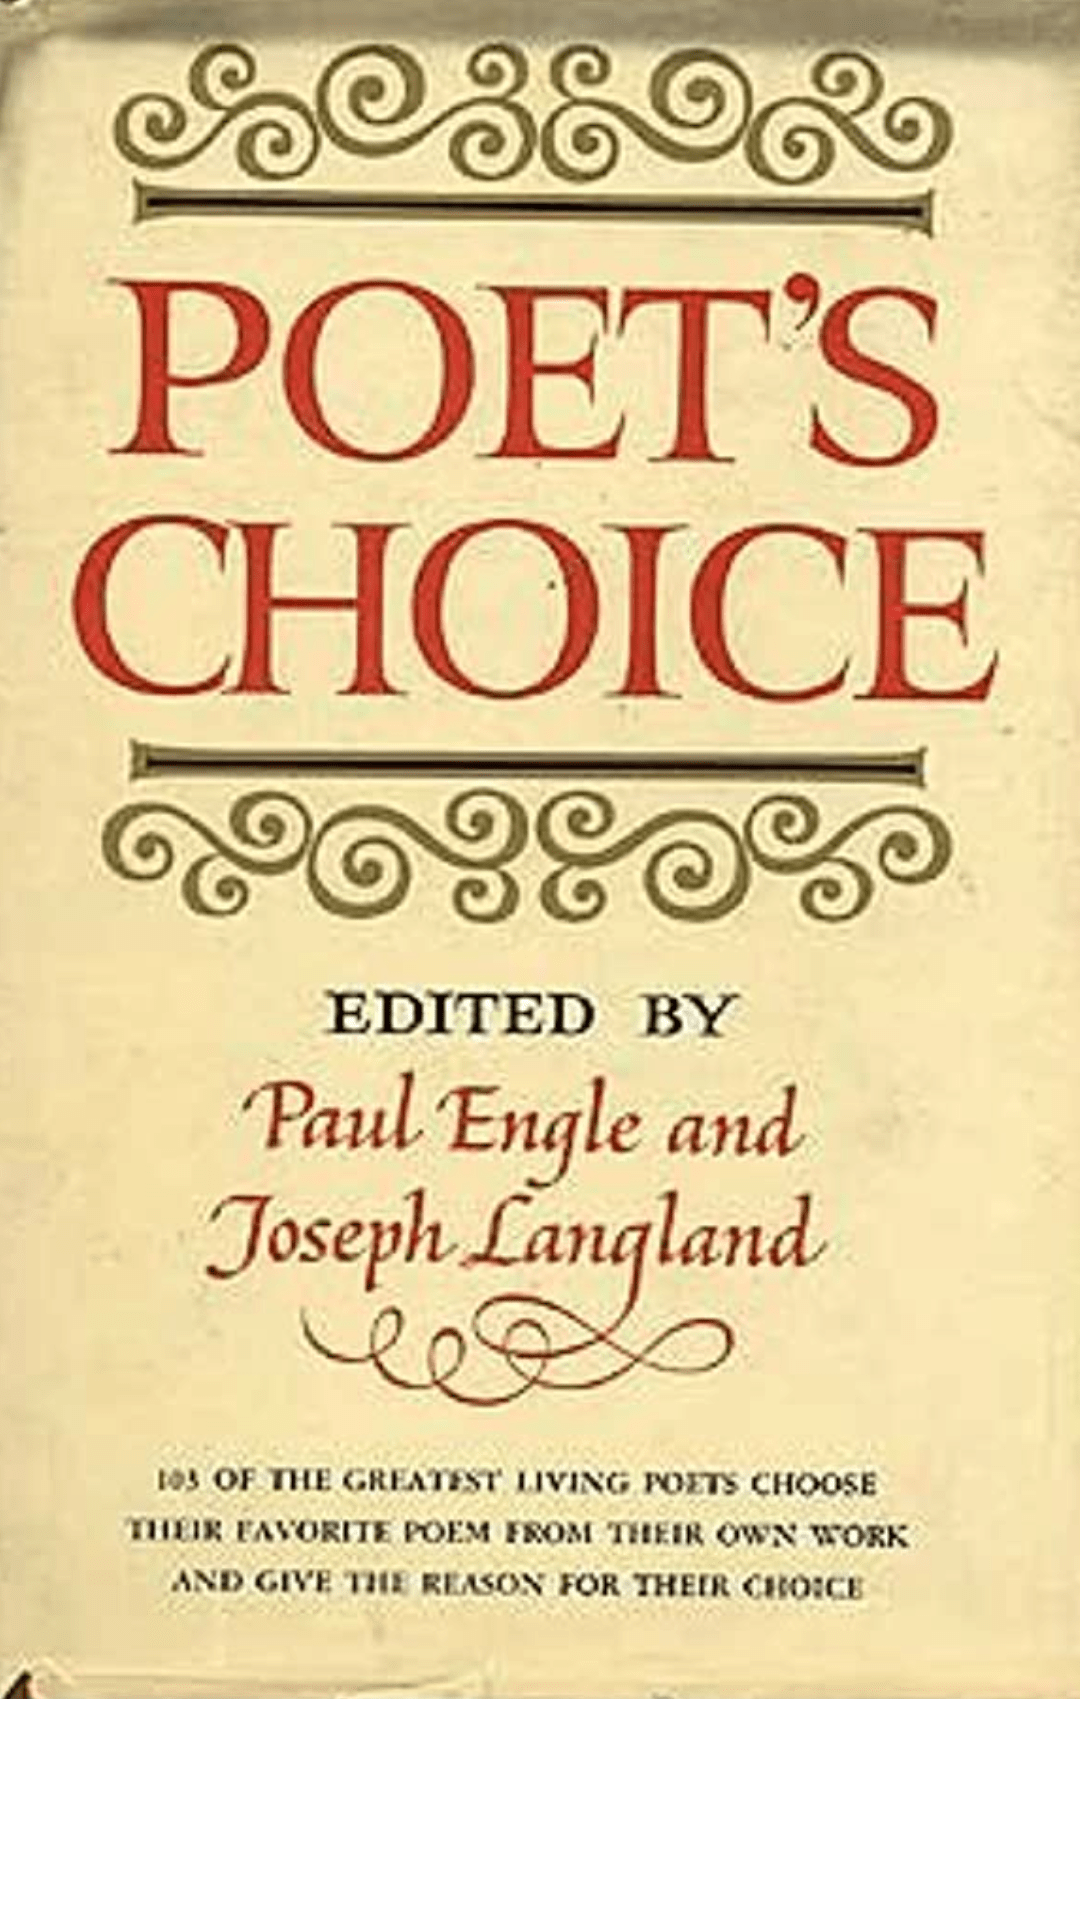 Poet's Choice by Paul Engle